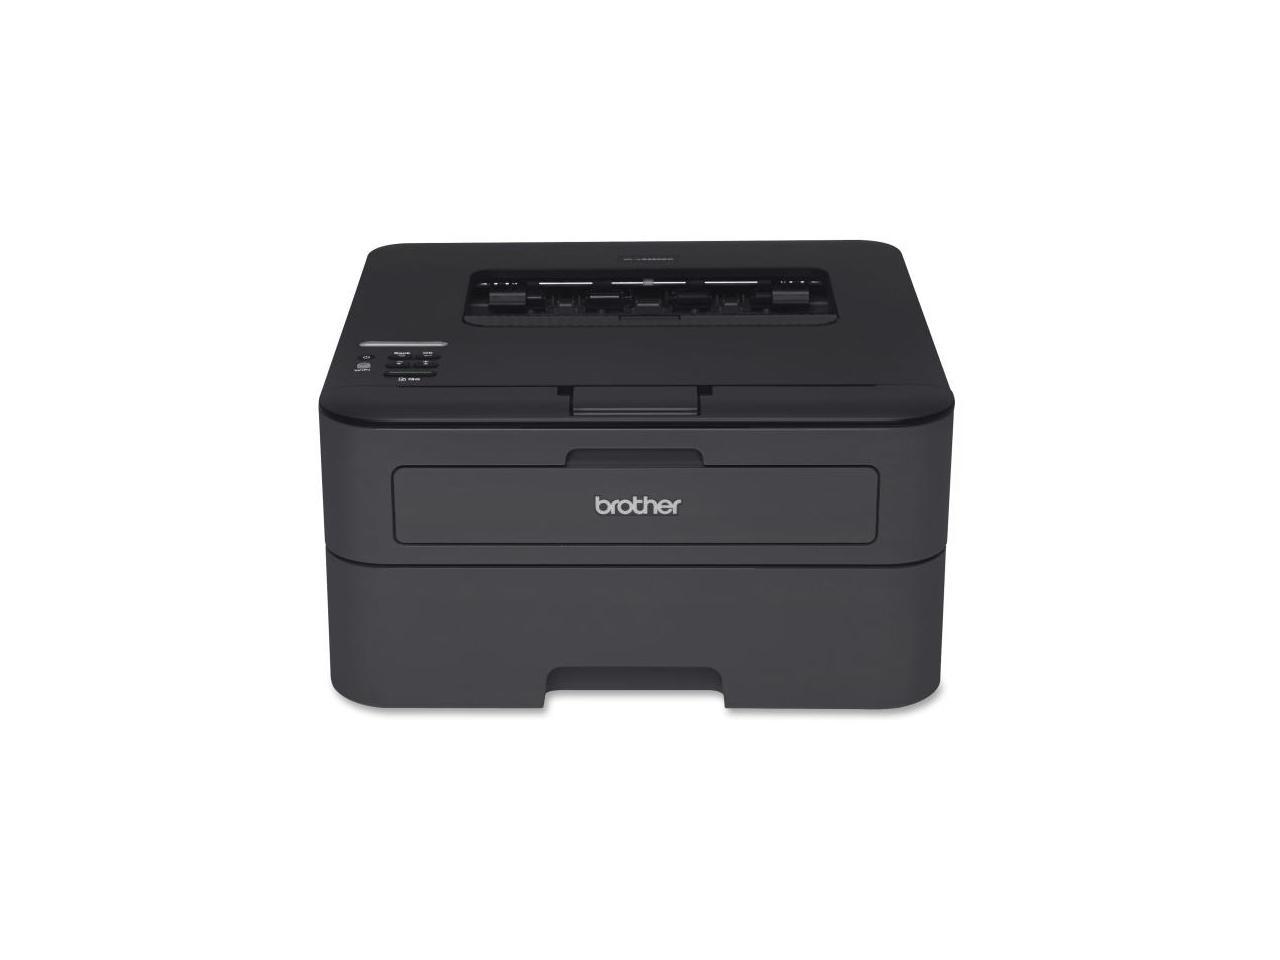 Brother HL-L2340DW Laser Printer - Monochrome - 2400 x 600 dpi Print - Plain Paper Print - Desktop